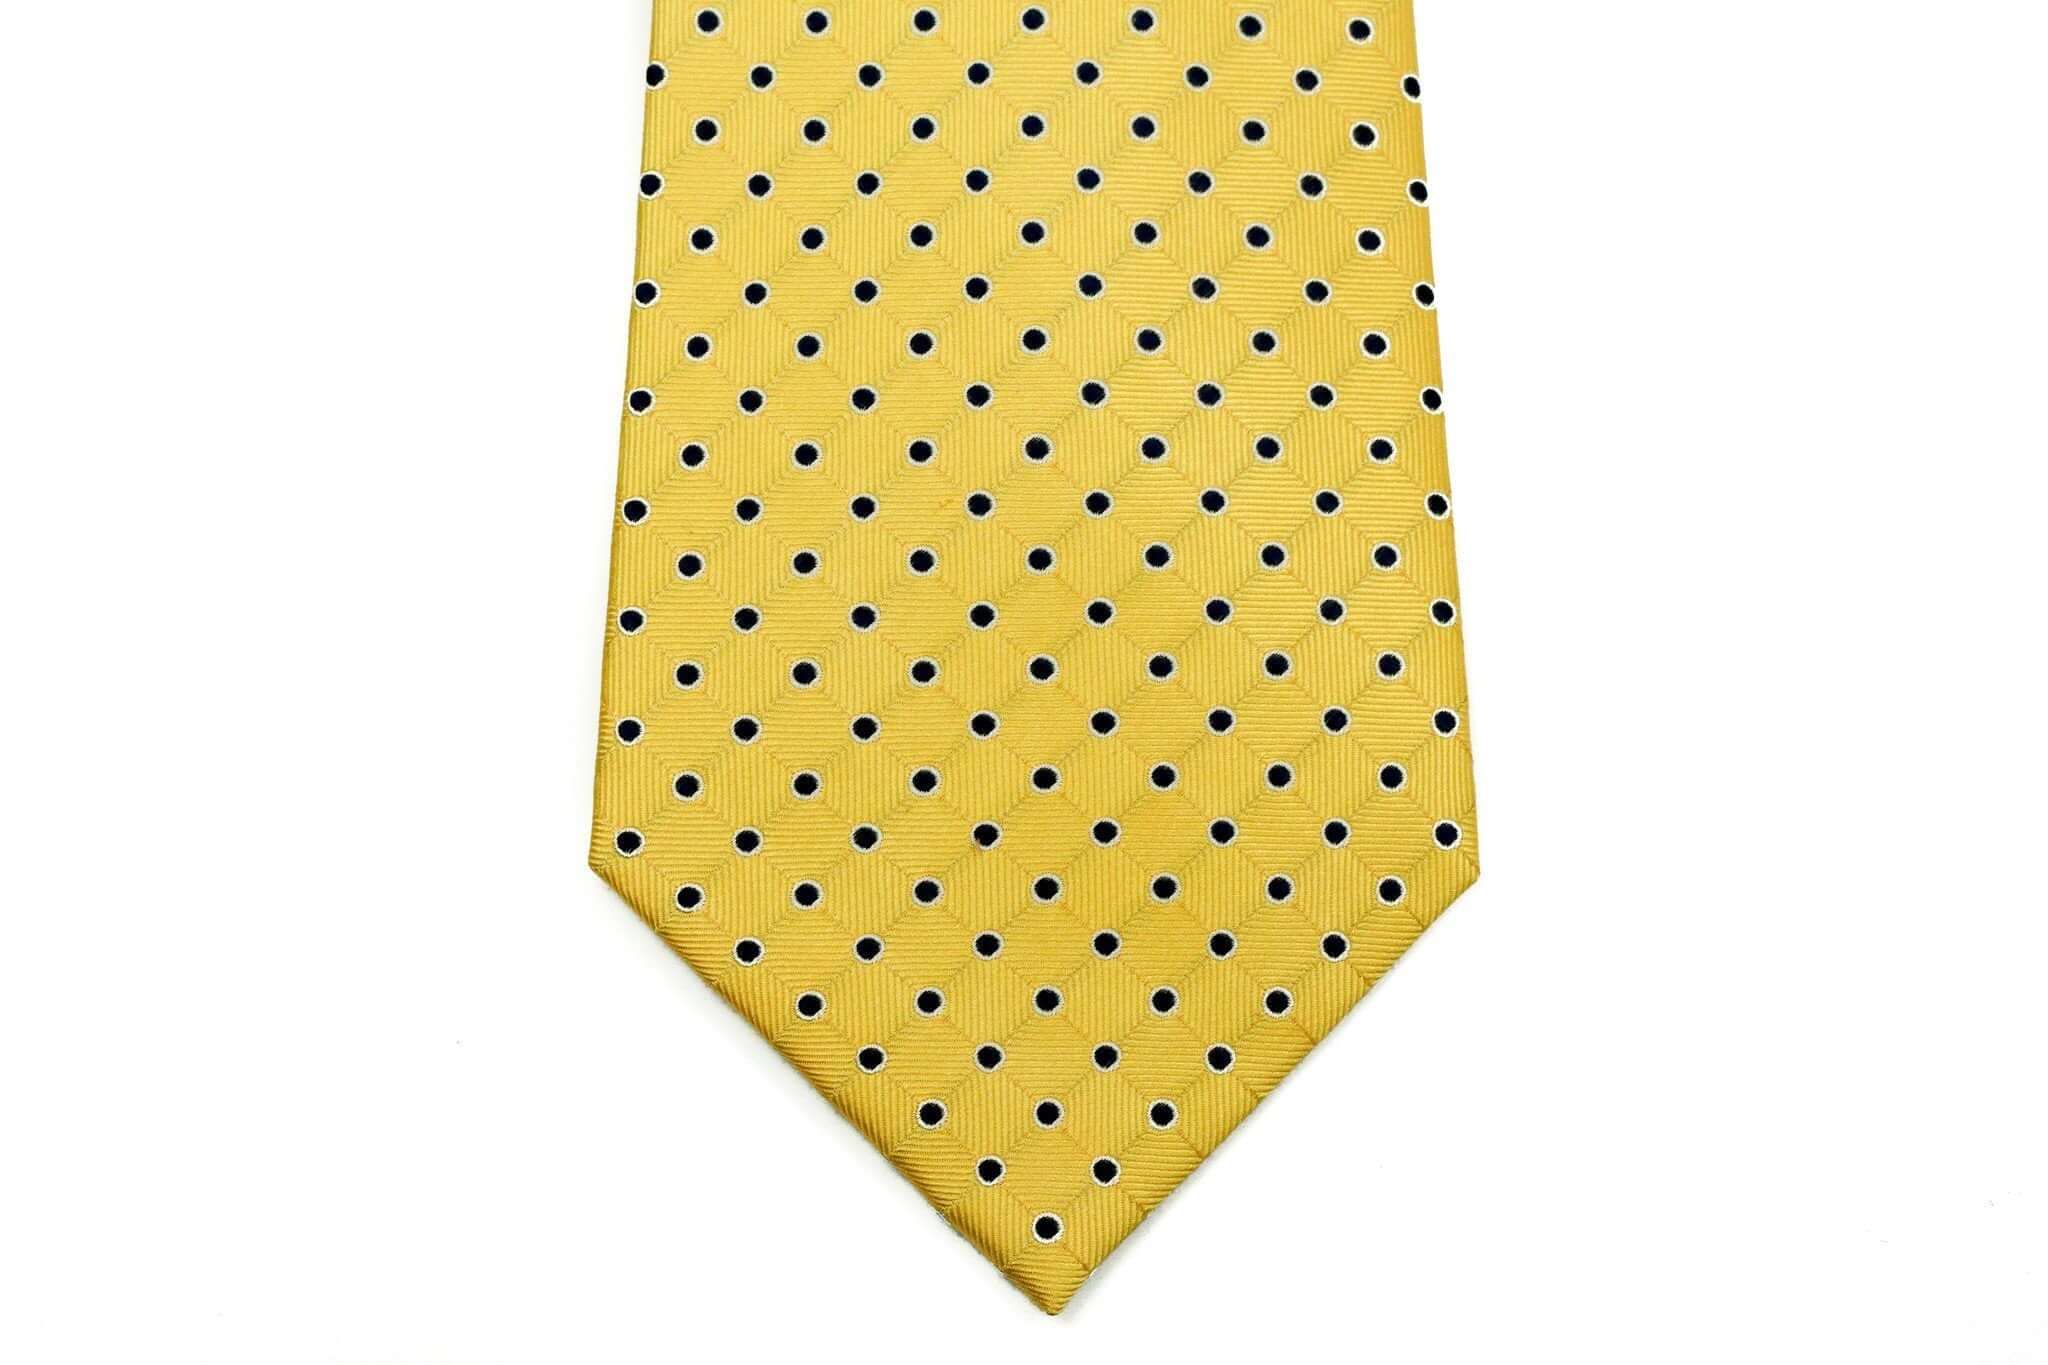 Extra Long Ties - 100% Silk Extra Long Yellow And Navy Polka Dot Tie